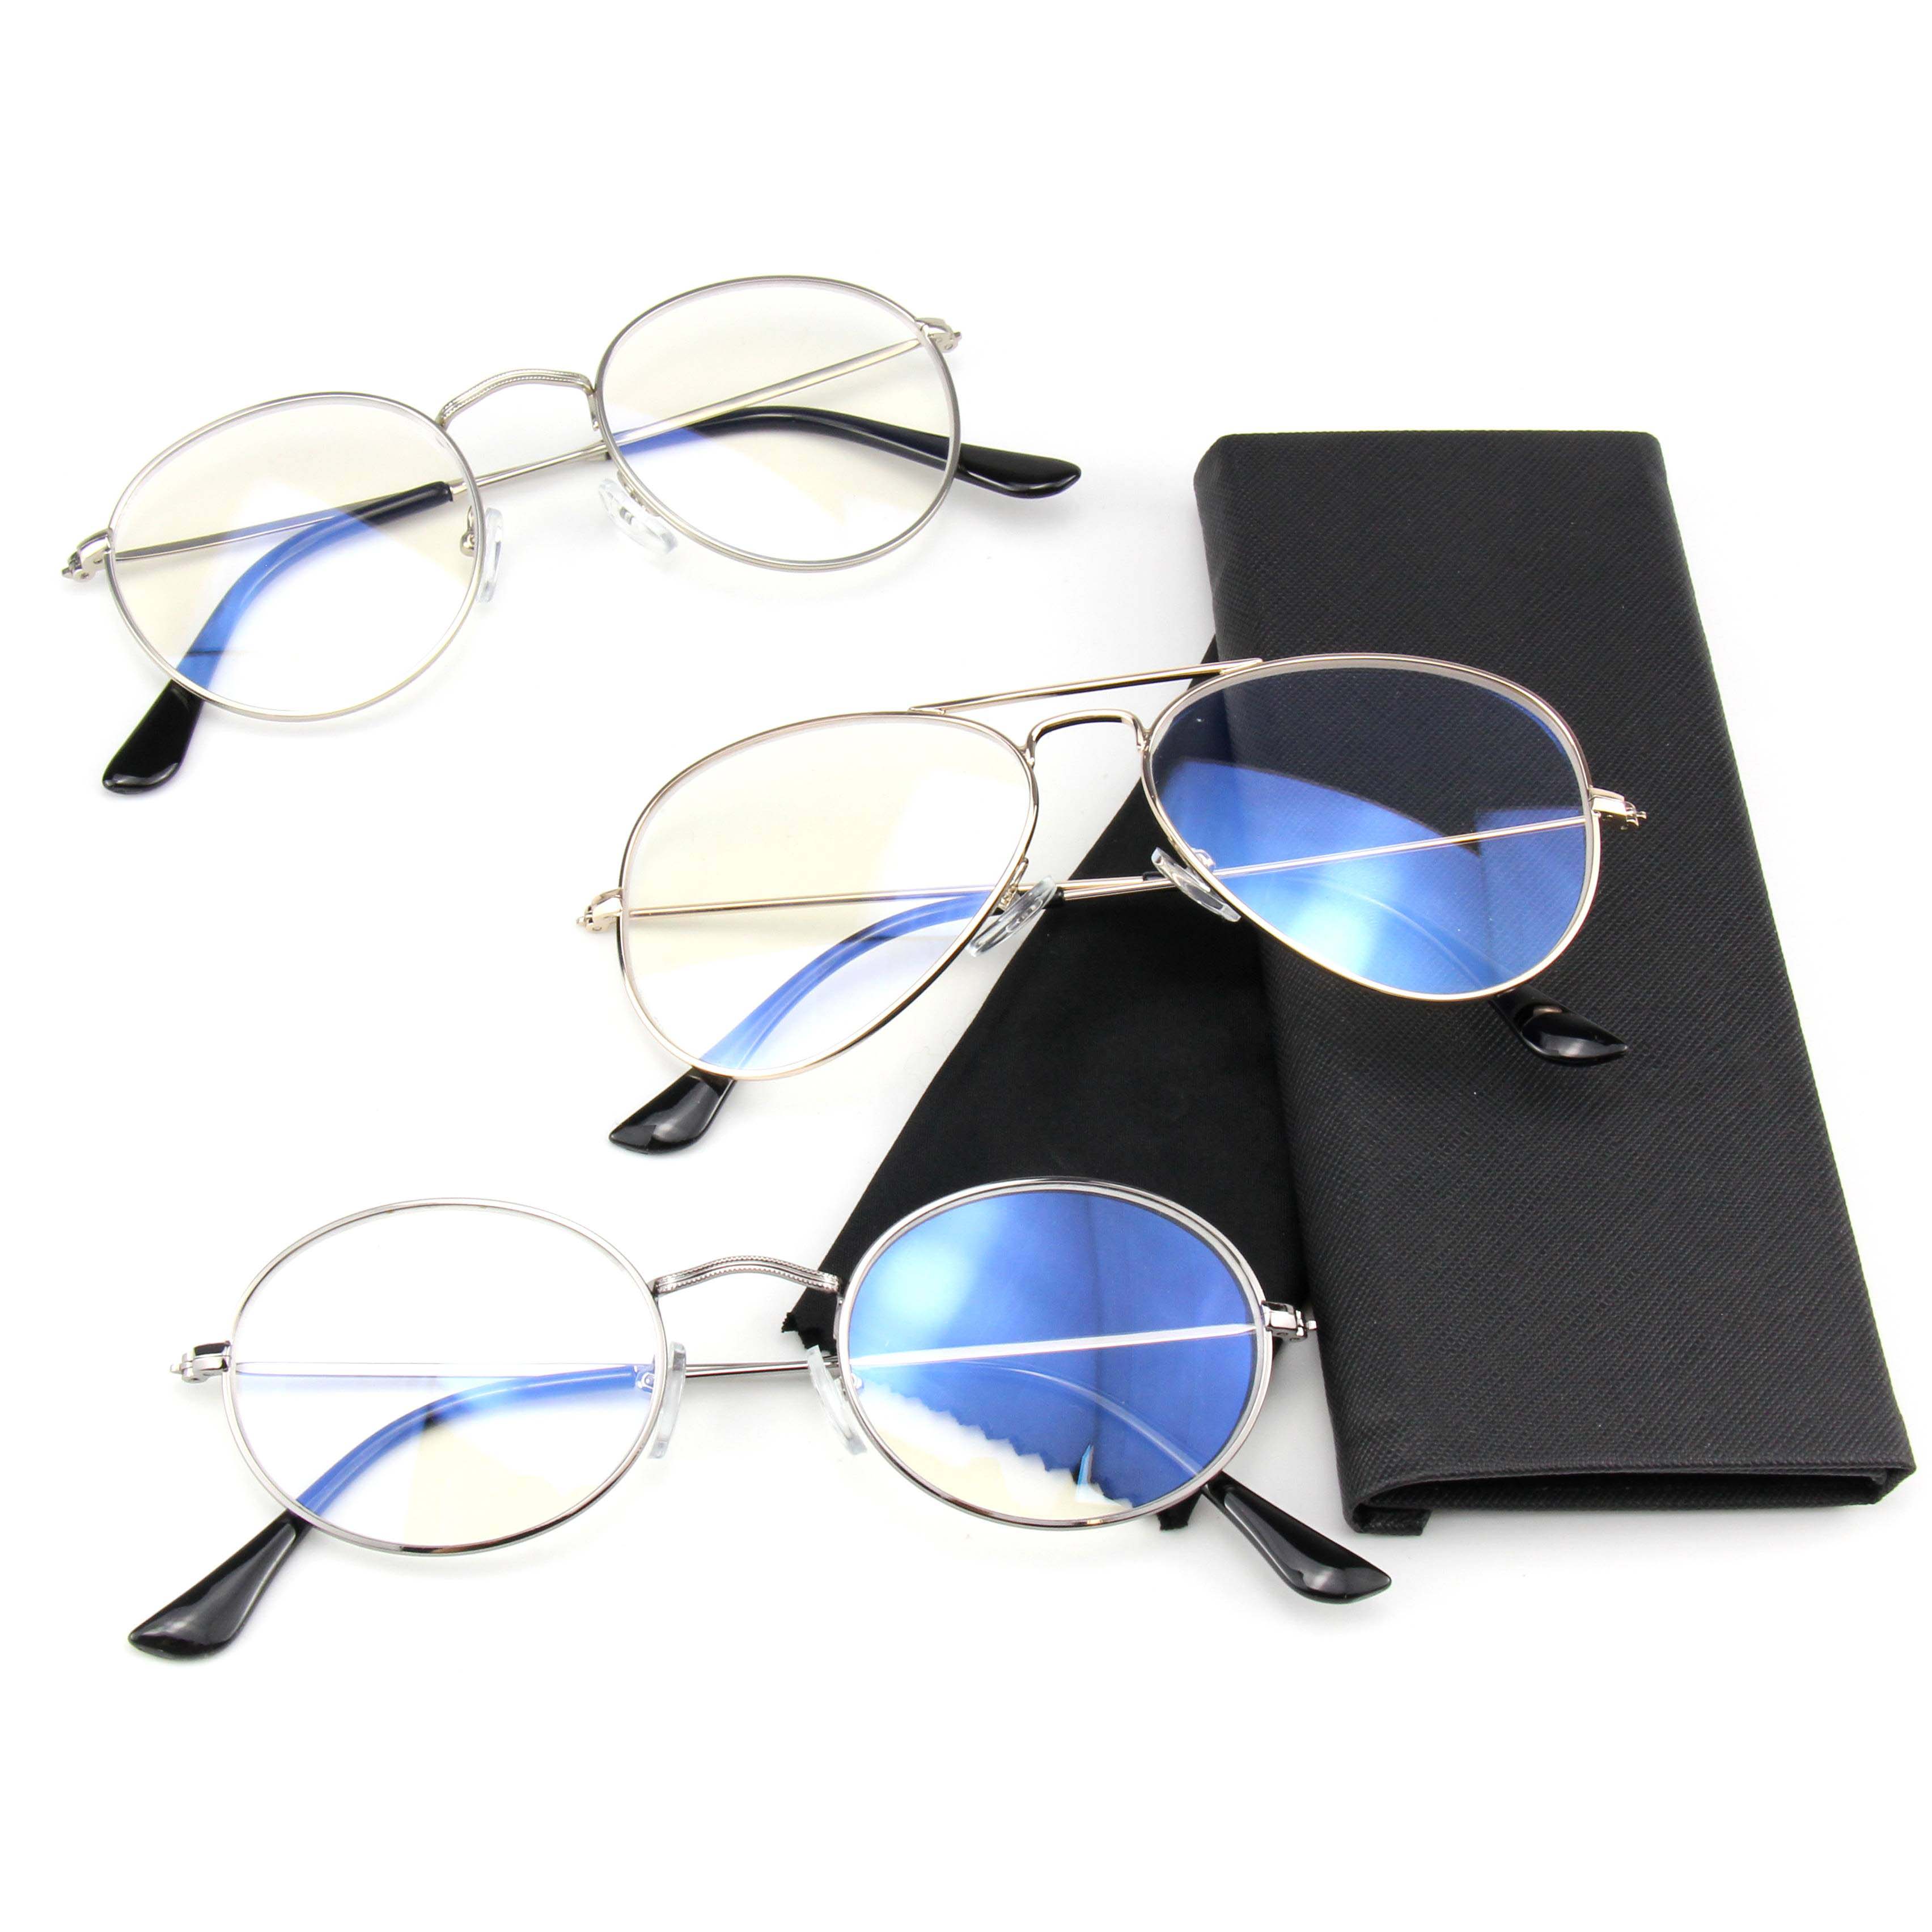 Eugenia optical glasses wholesale modern design -1